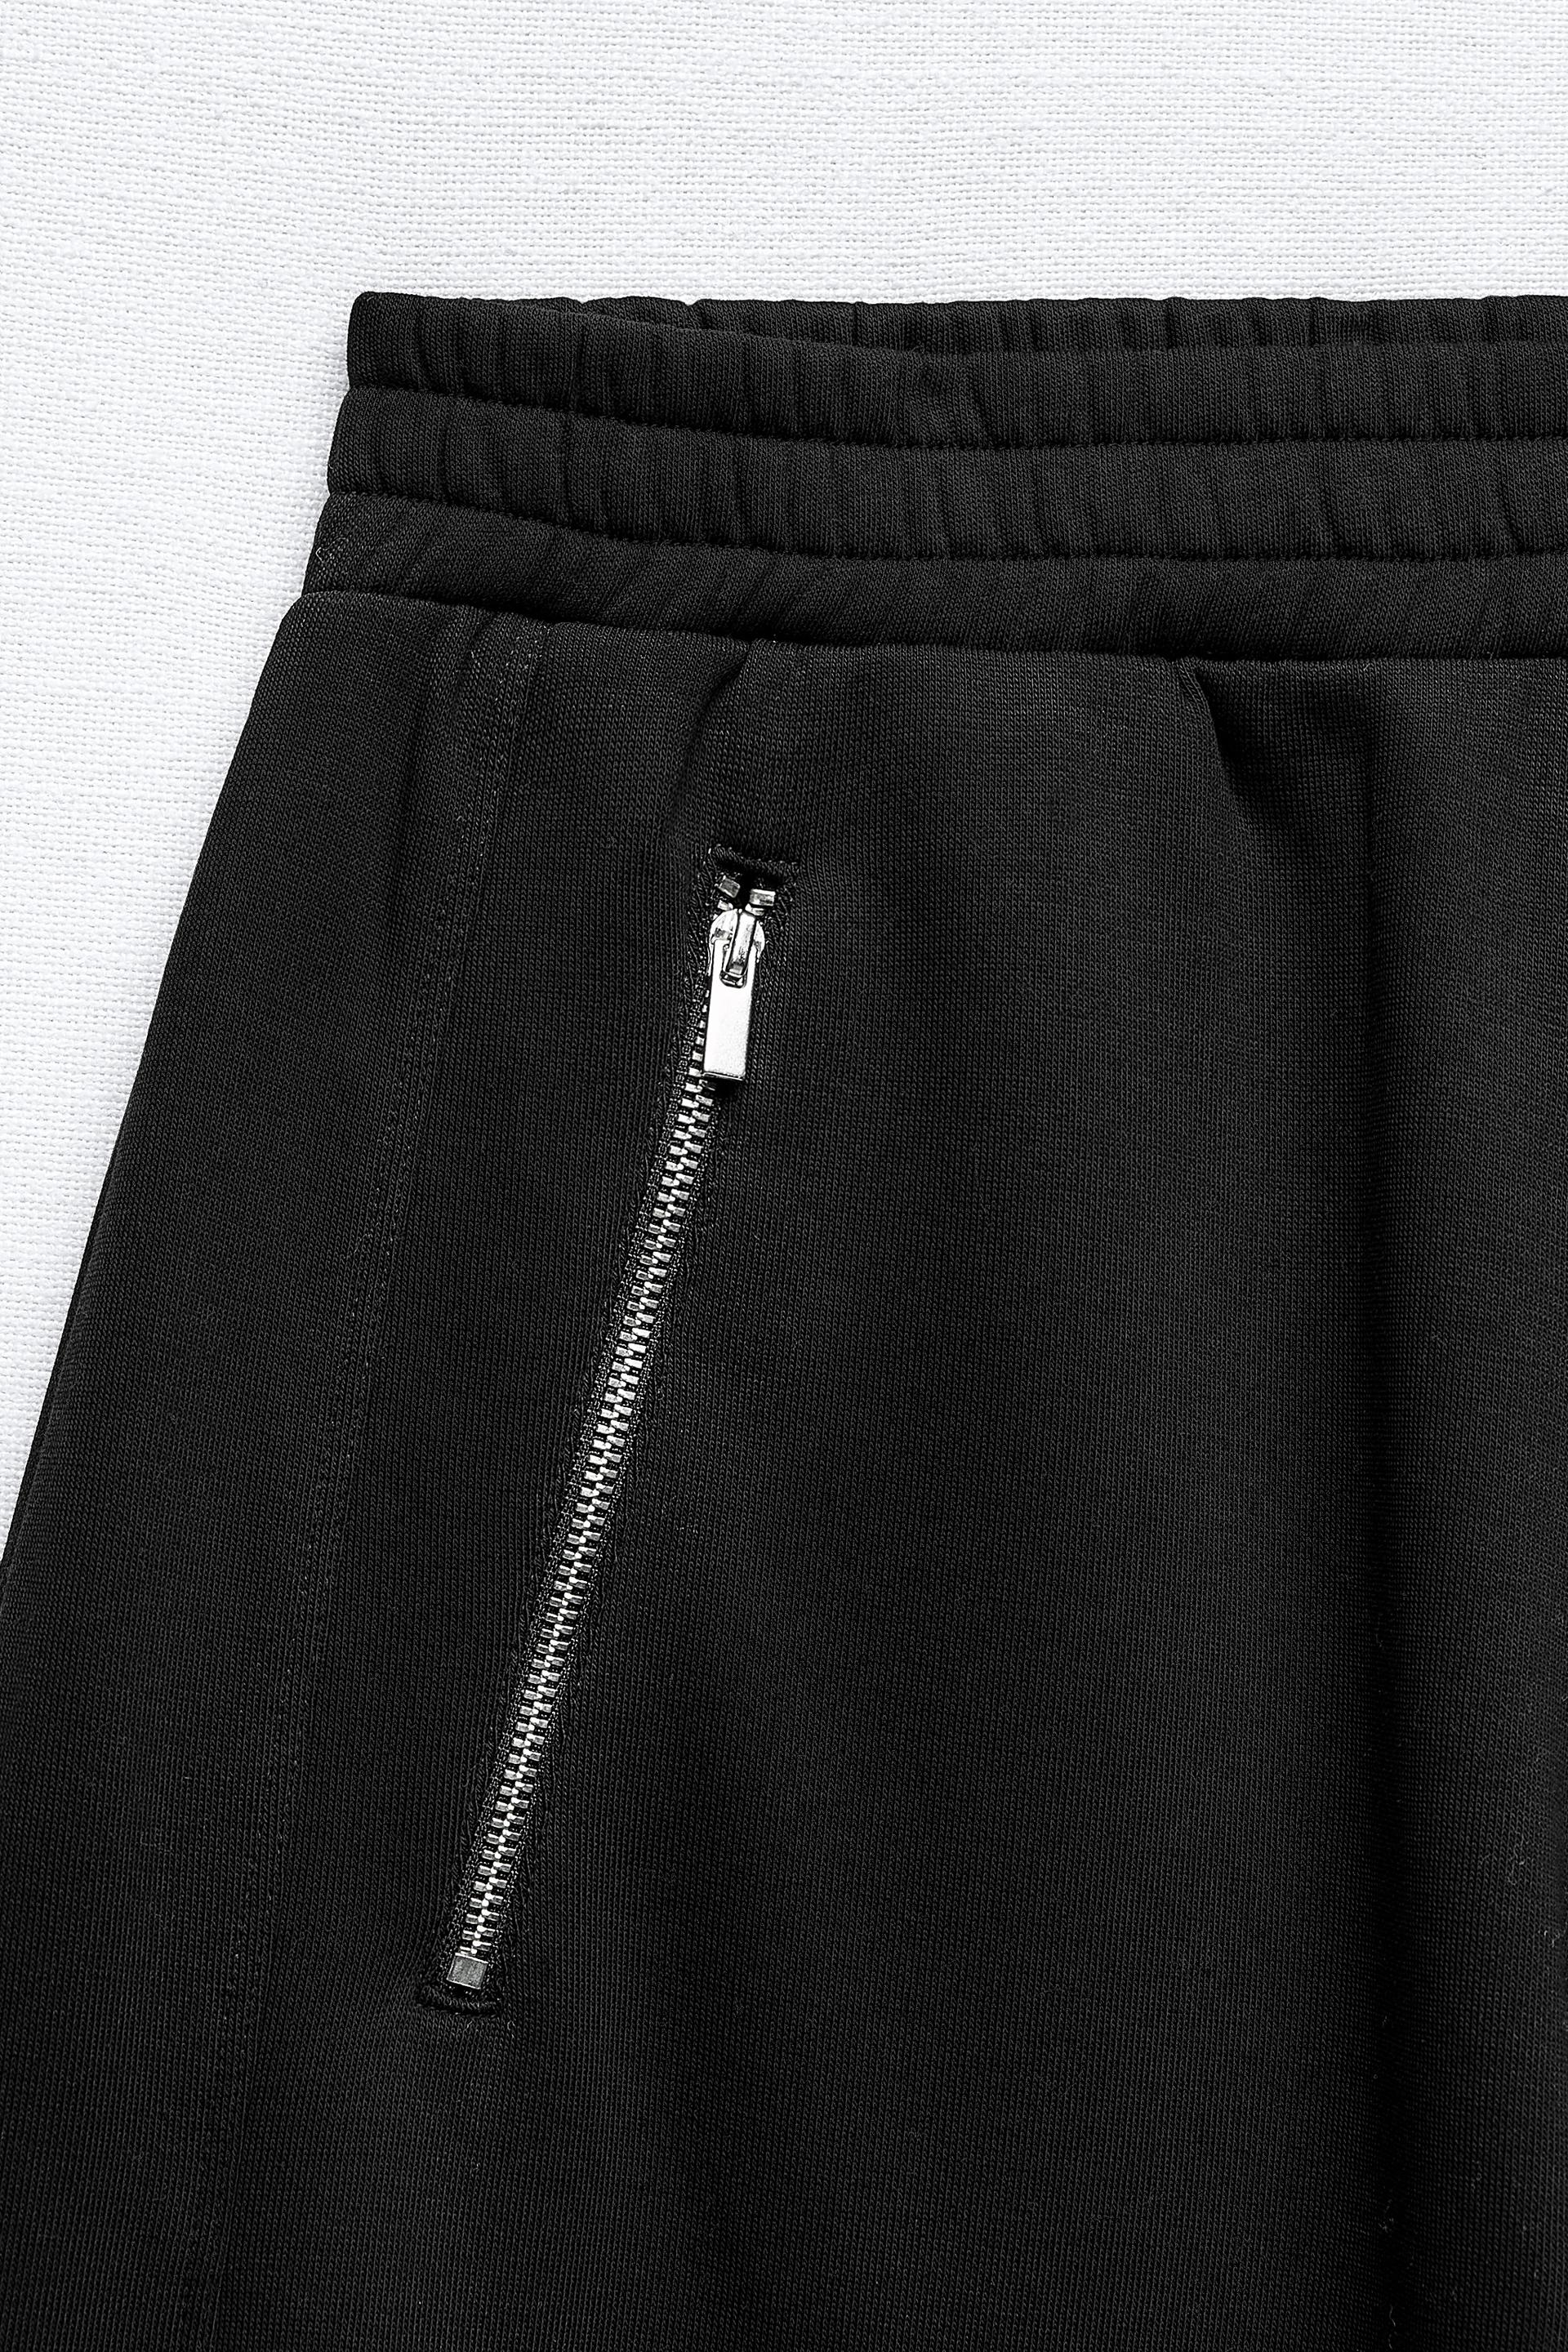 Women's Zara Basic Black Stretch Pull On Pants With Zipper Pocket Sz Lg 